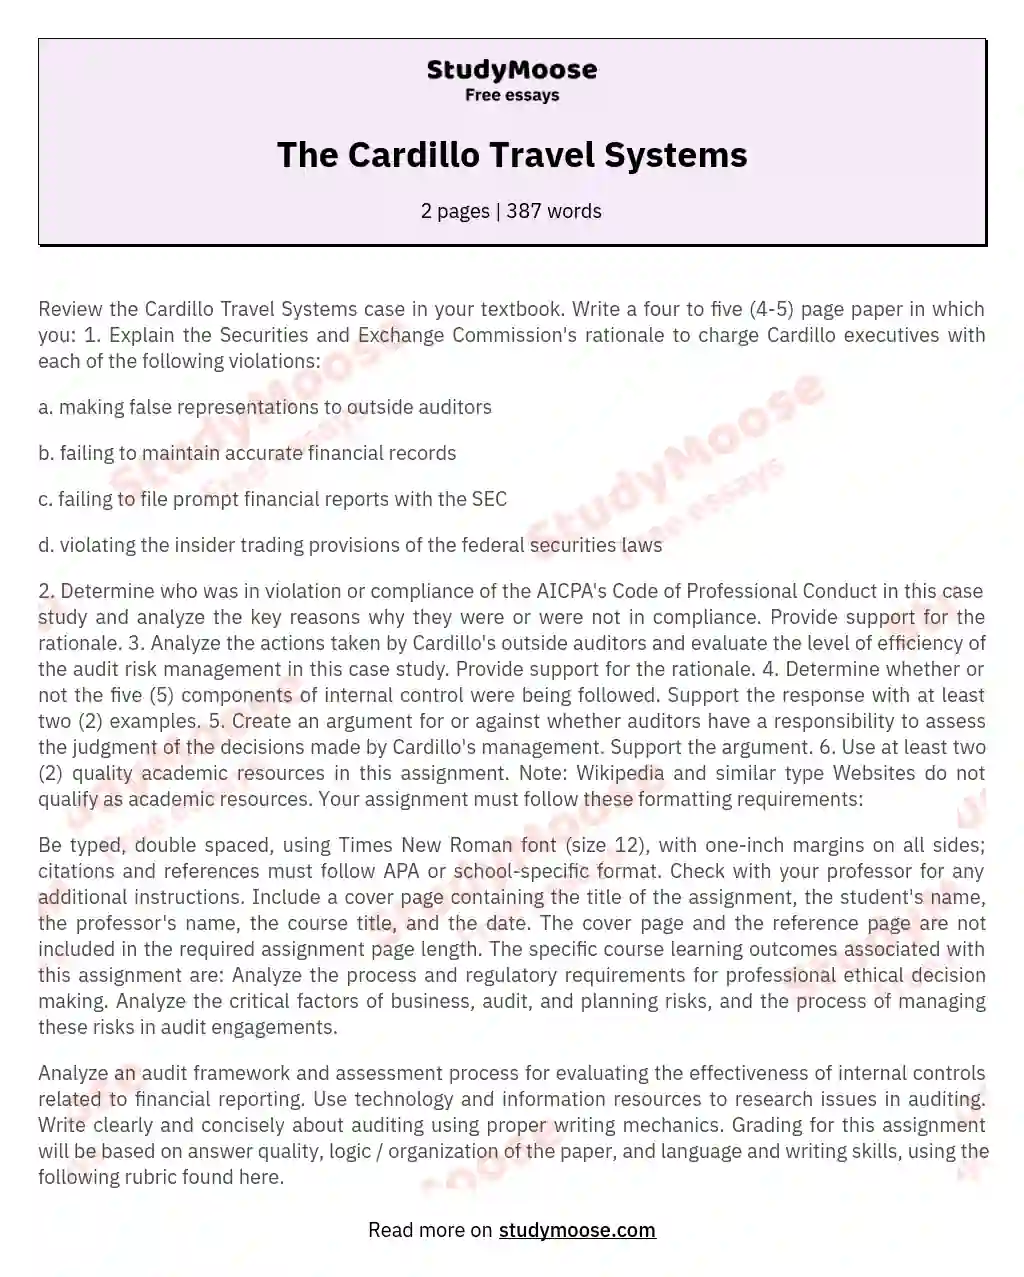 The Cardillo Travel Systems essay